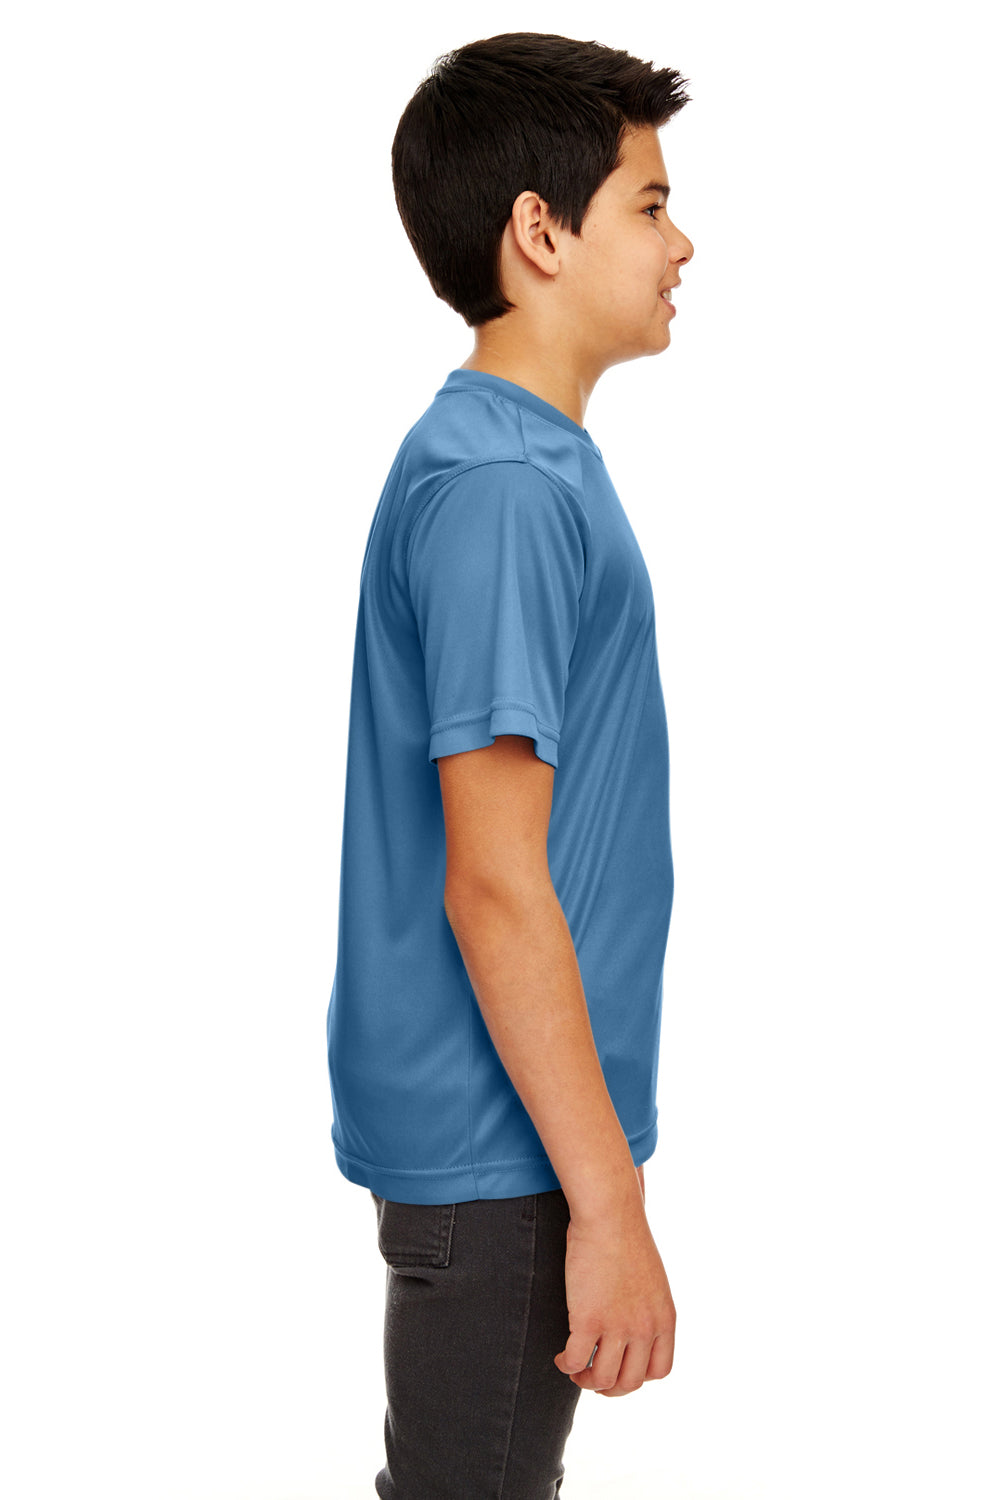 UltraClub 8420Y Youth Cool & Dry Performance Moisture Wicking Short Sleeve Crewneck T-Shirt Indigo Blue Side